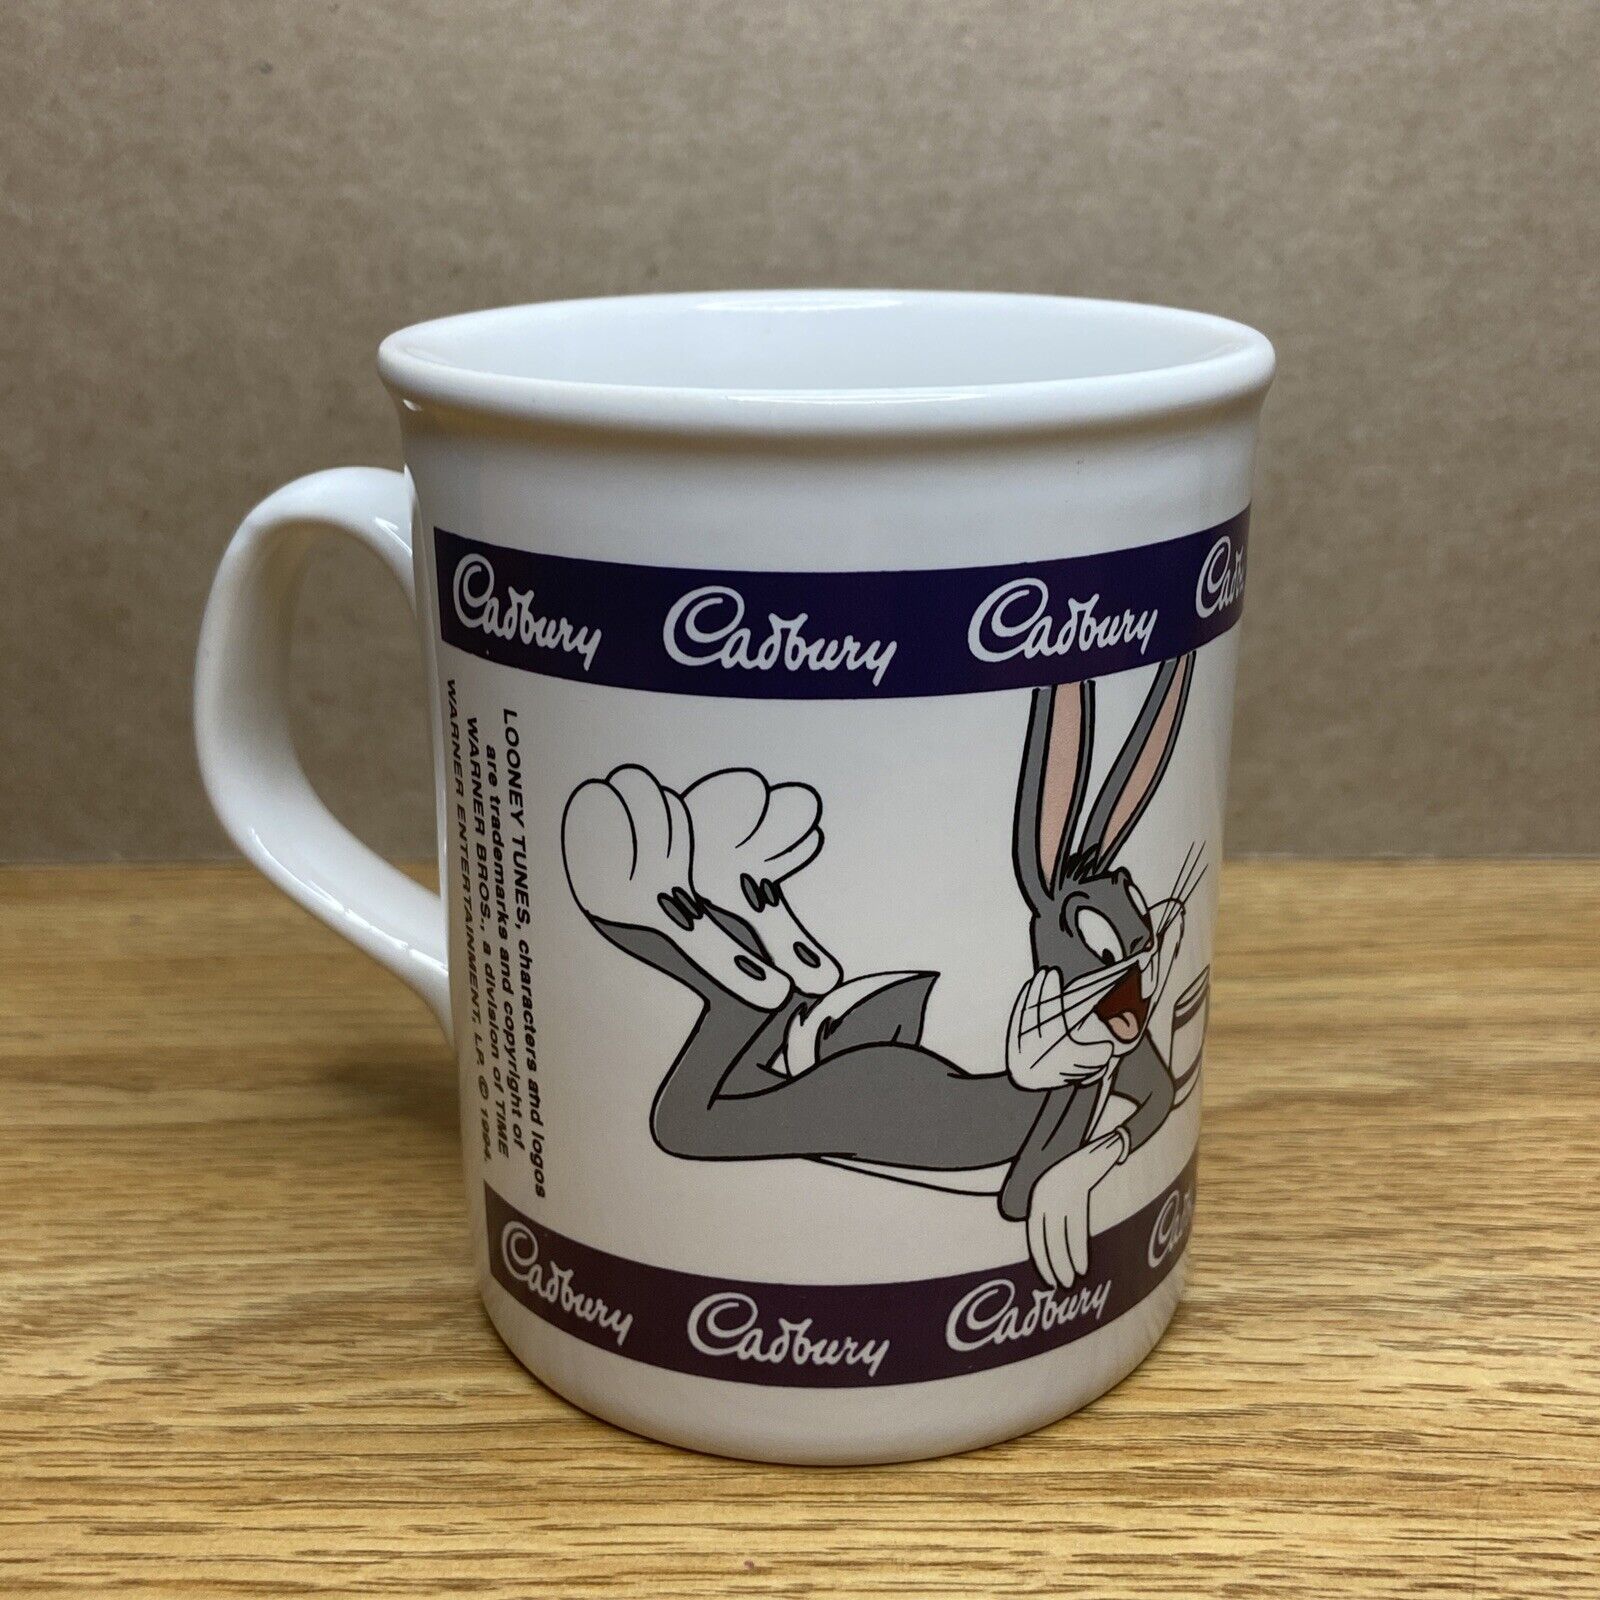 Vintage 1994 Cadbury's Looney Tunes "Bugs Bunny" Ceramic Mug by Kilncraft - $9.50